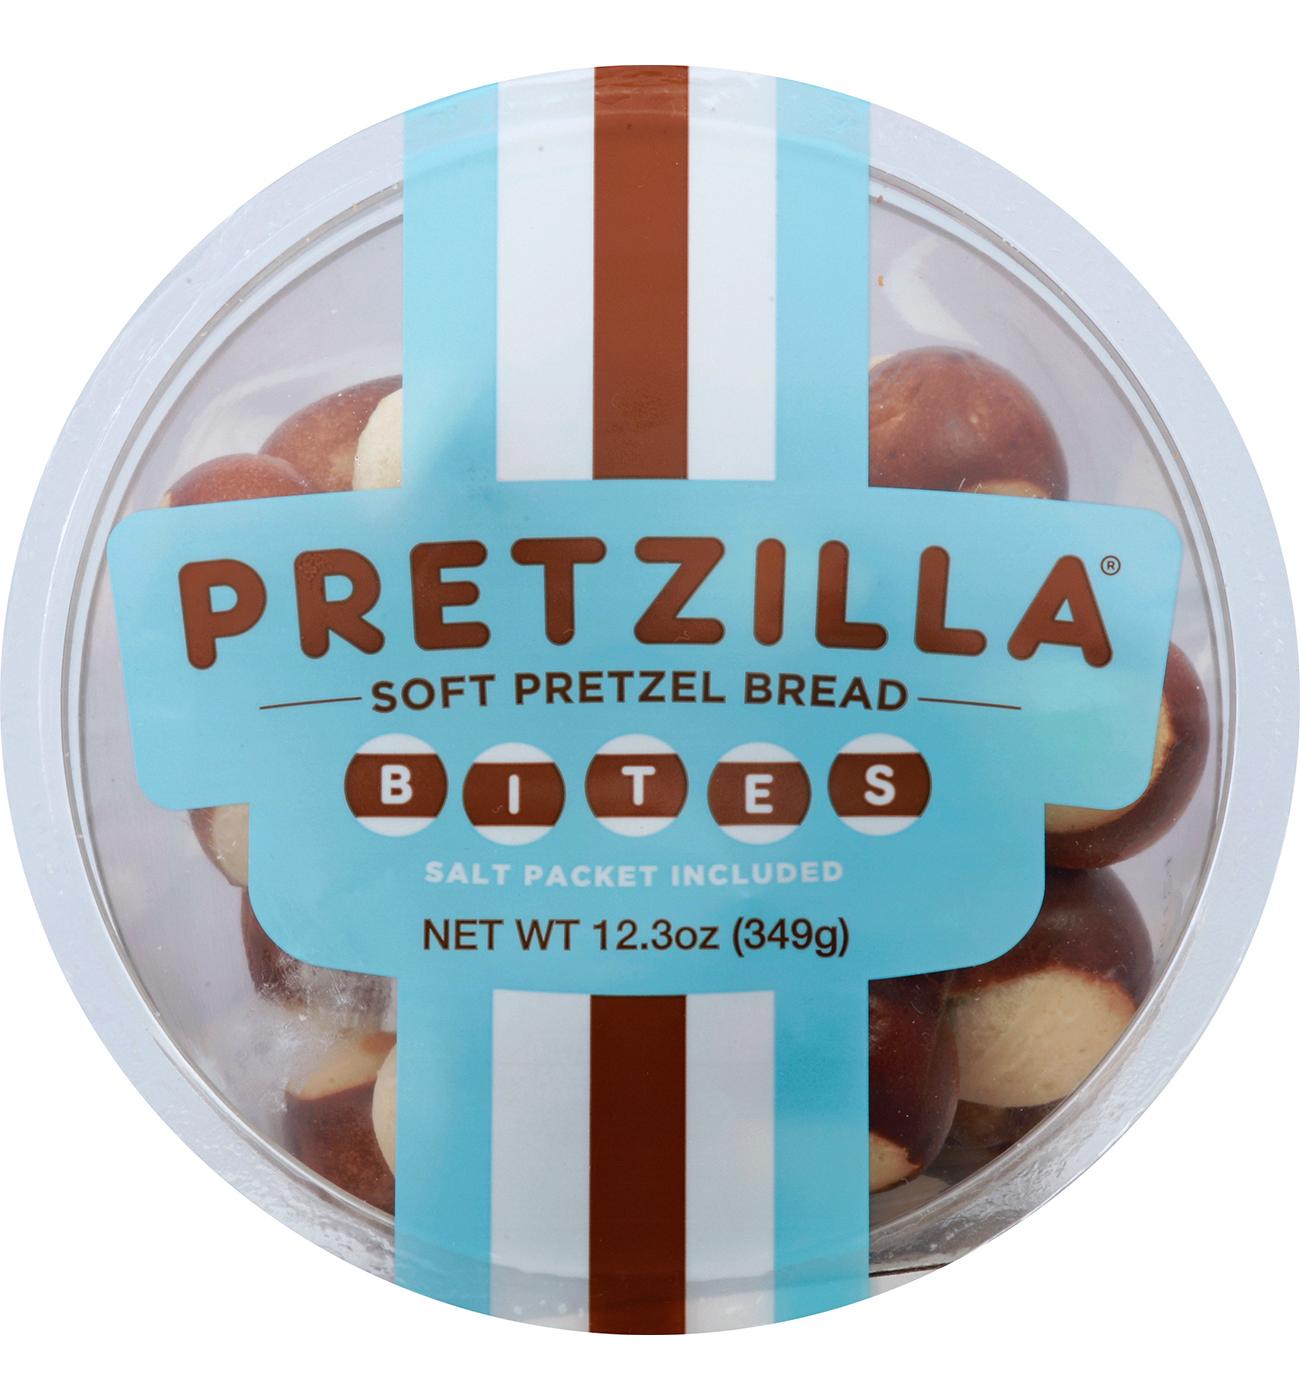 PRETZILLA Soft Pretzel Bread Bites; image 1 of 2